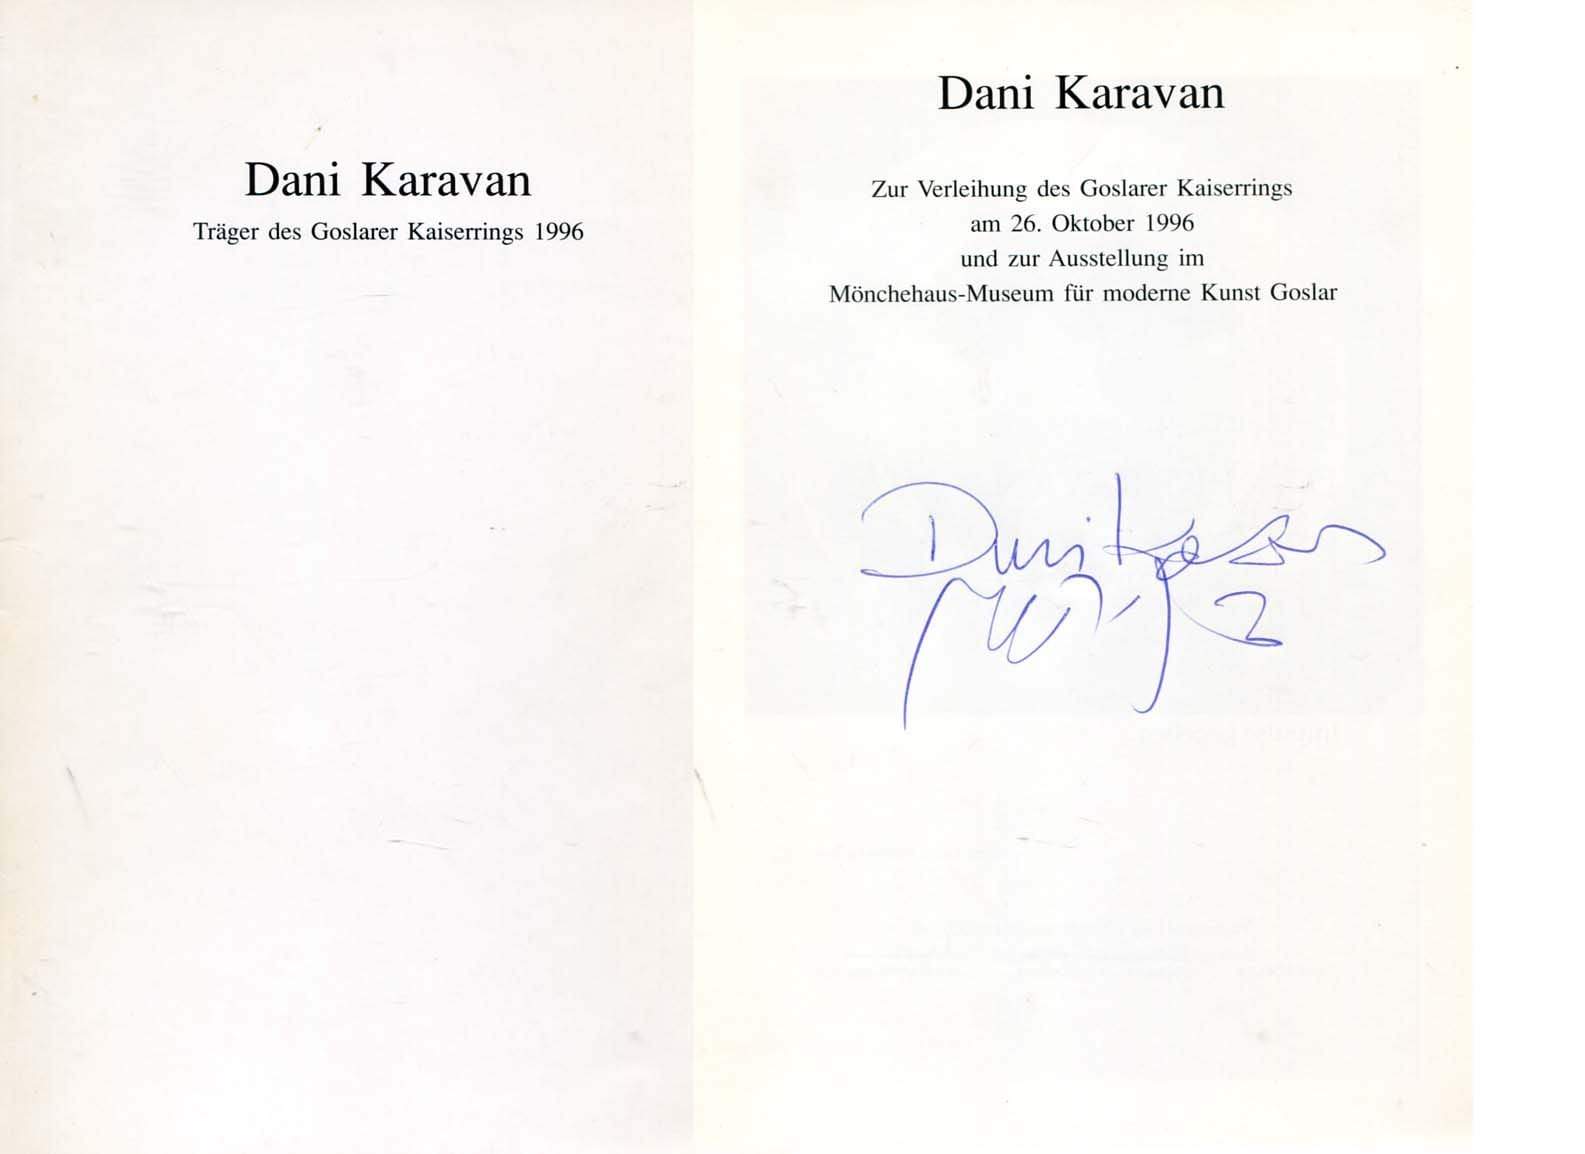 Karavan, Dani autograph